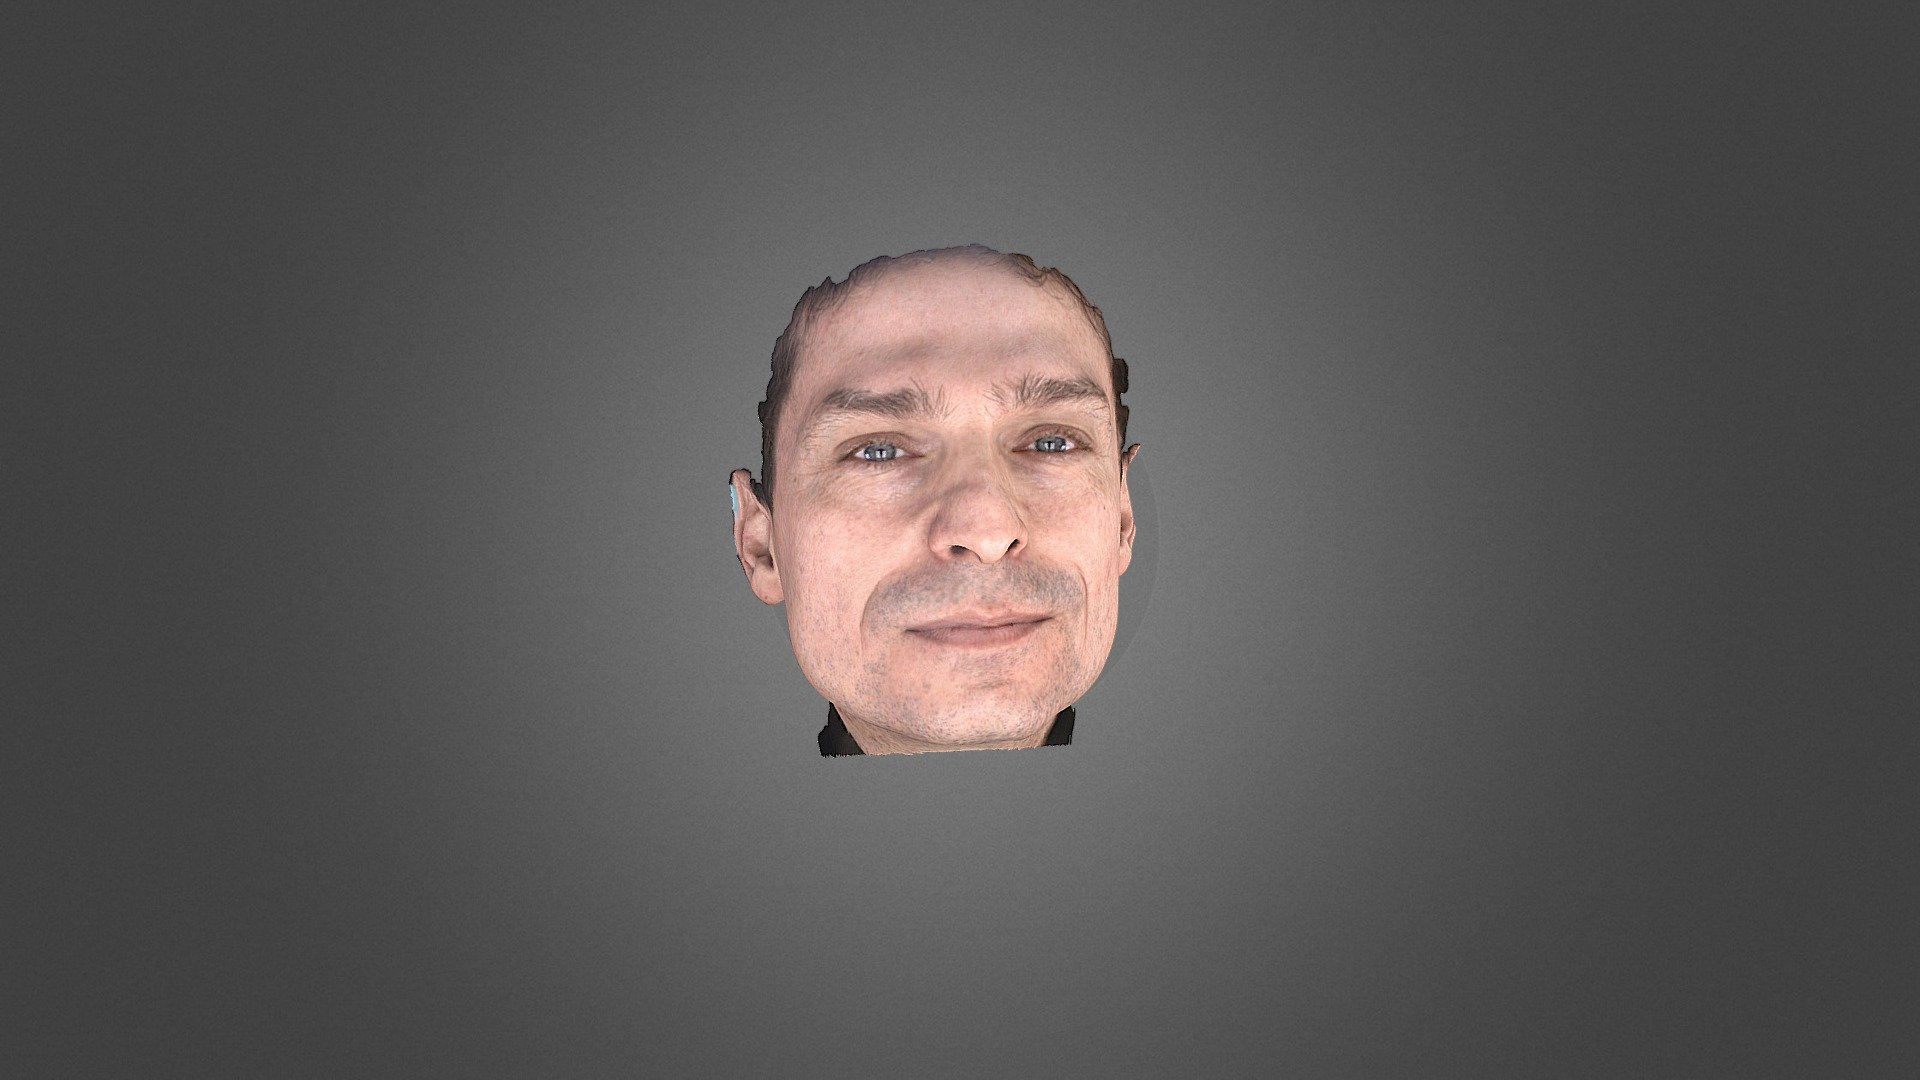 3D Face scanner Facense Model: Man